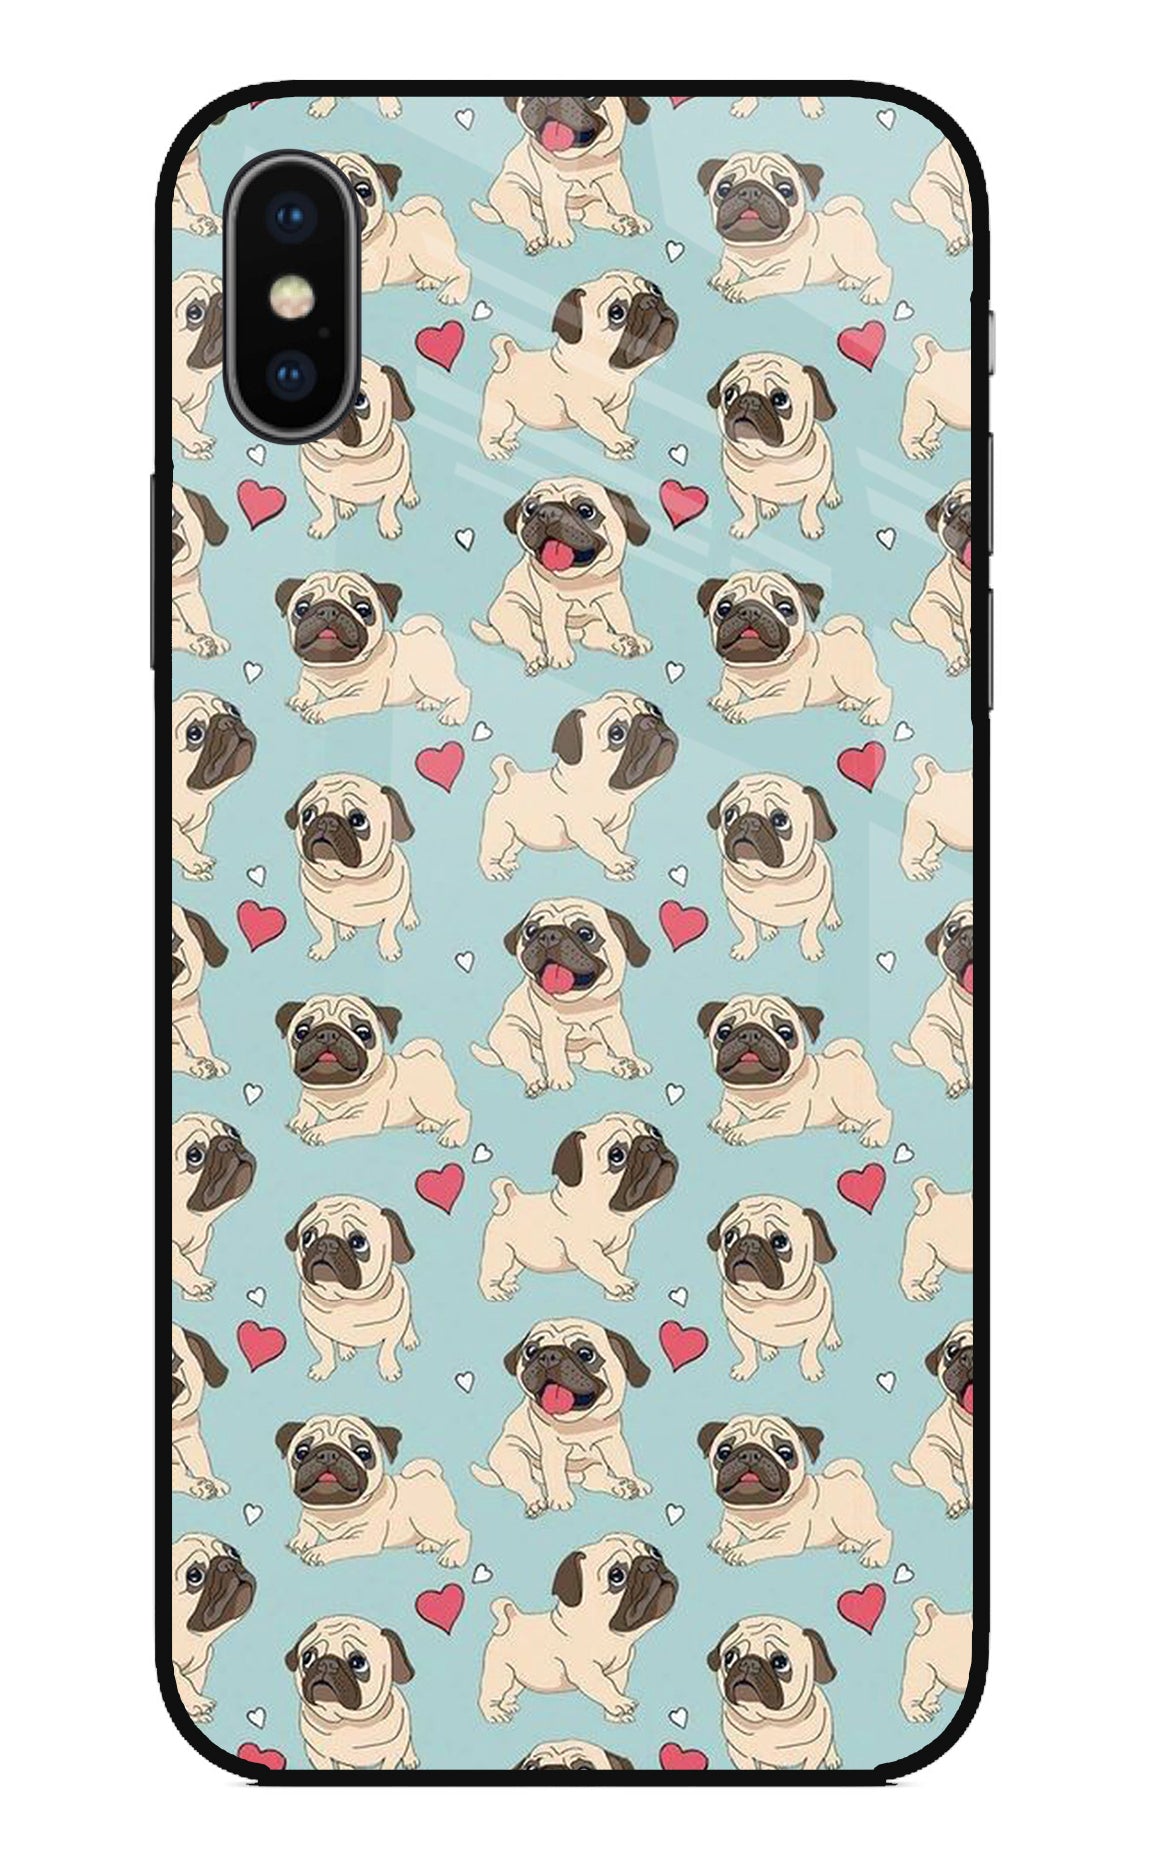 Pug Dog iPhone X Back Cover